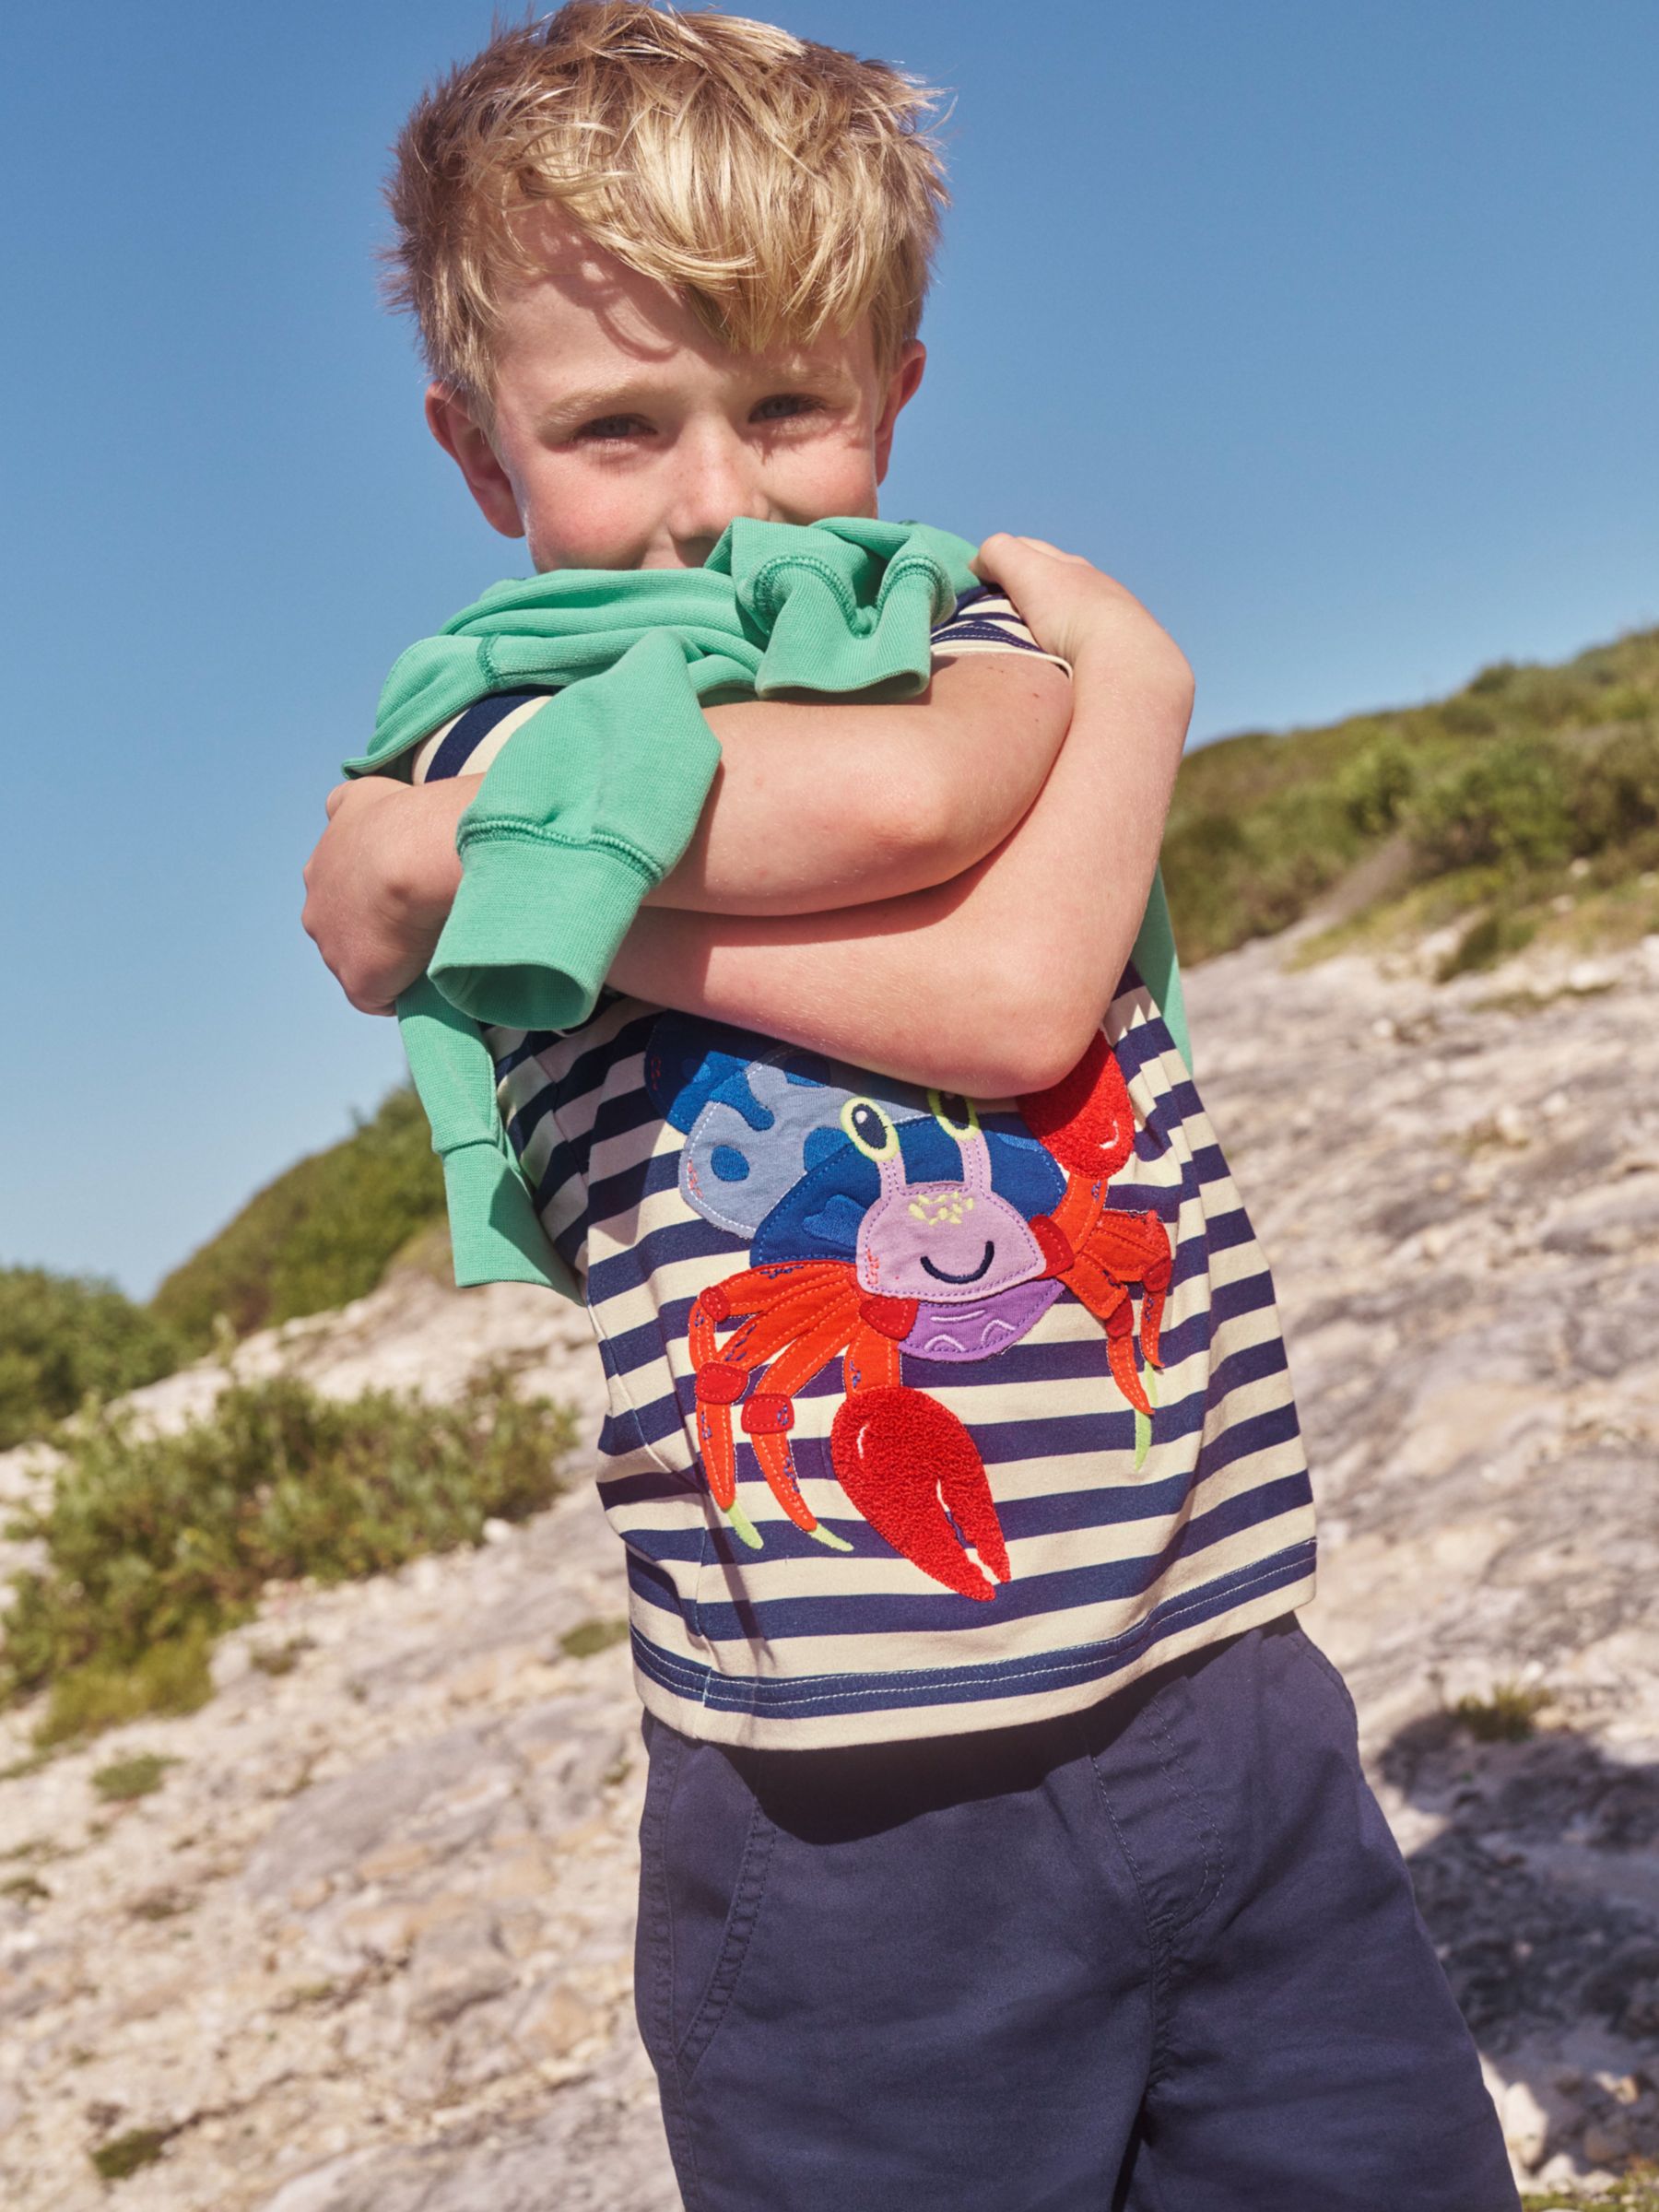 Buy Mini Boden Kids' Applique Crab Stripe T-Shirt, Sapphire/Ivory Online at johnlewis.com